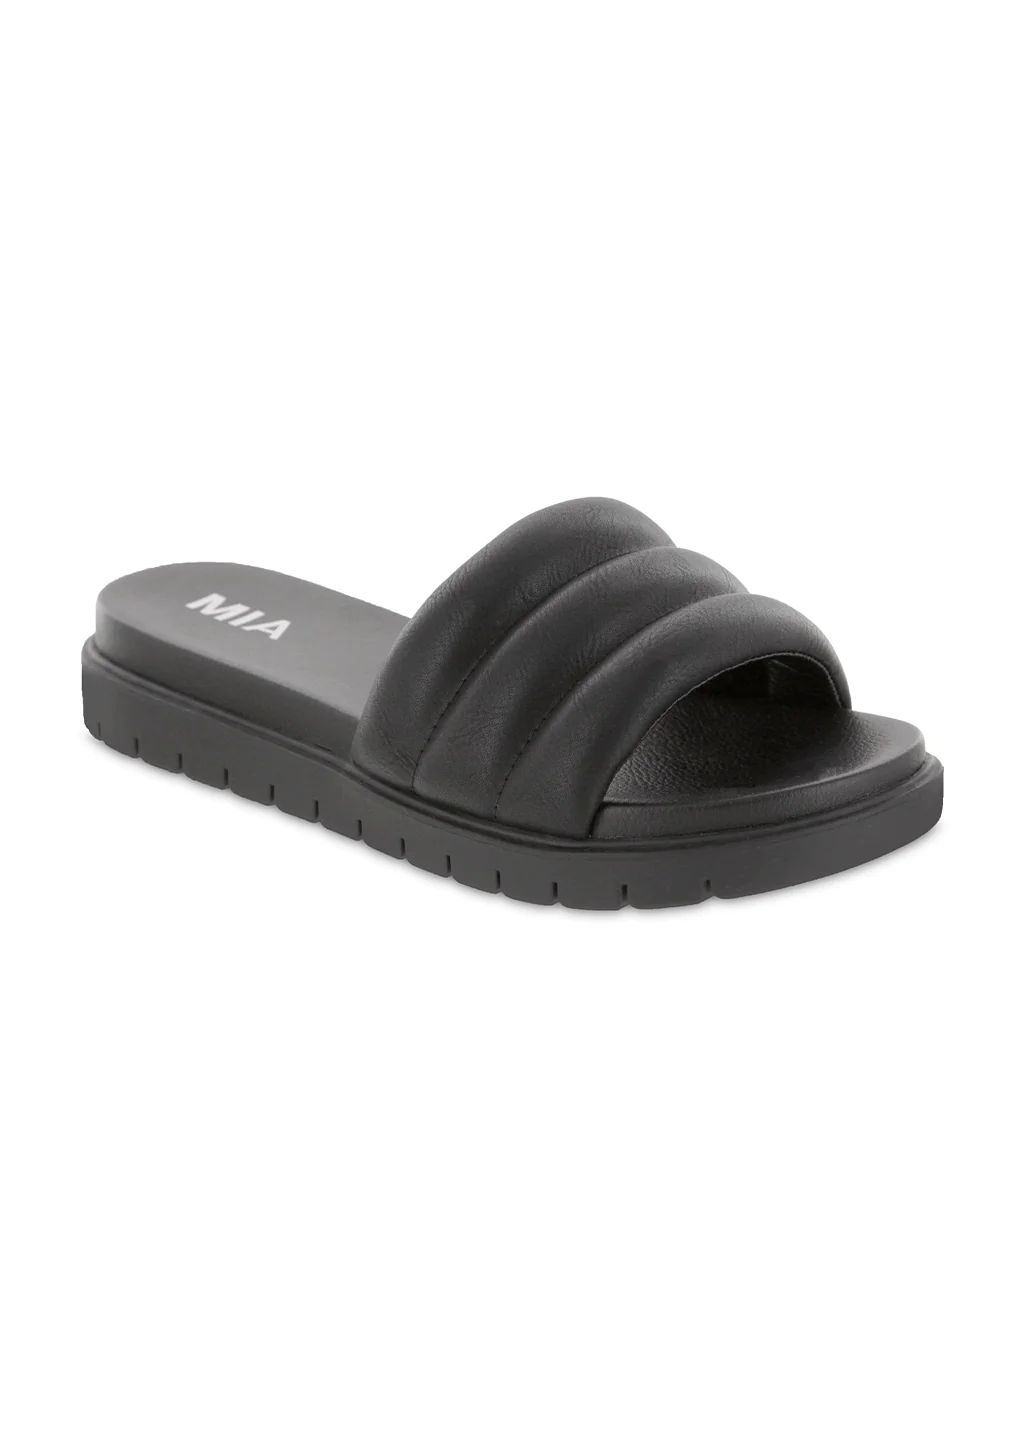 MISHEL - BLACK$19.99 | MIA Shoes